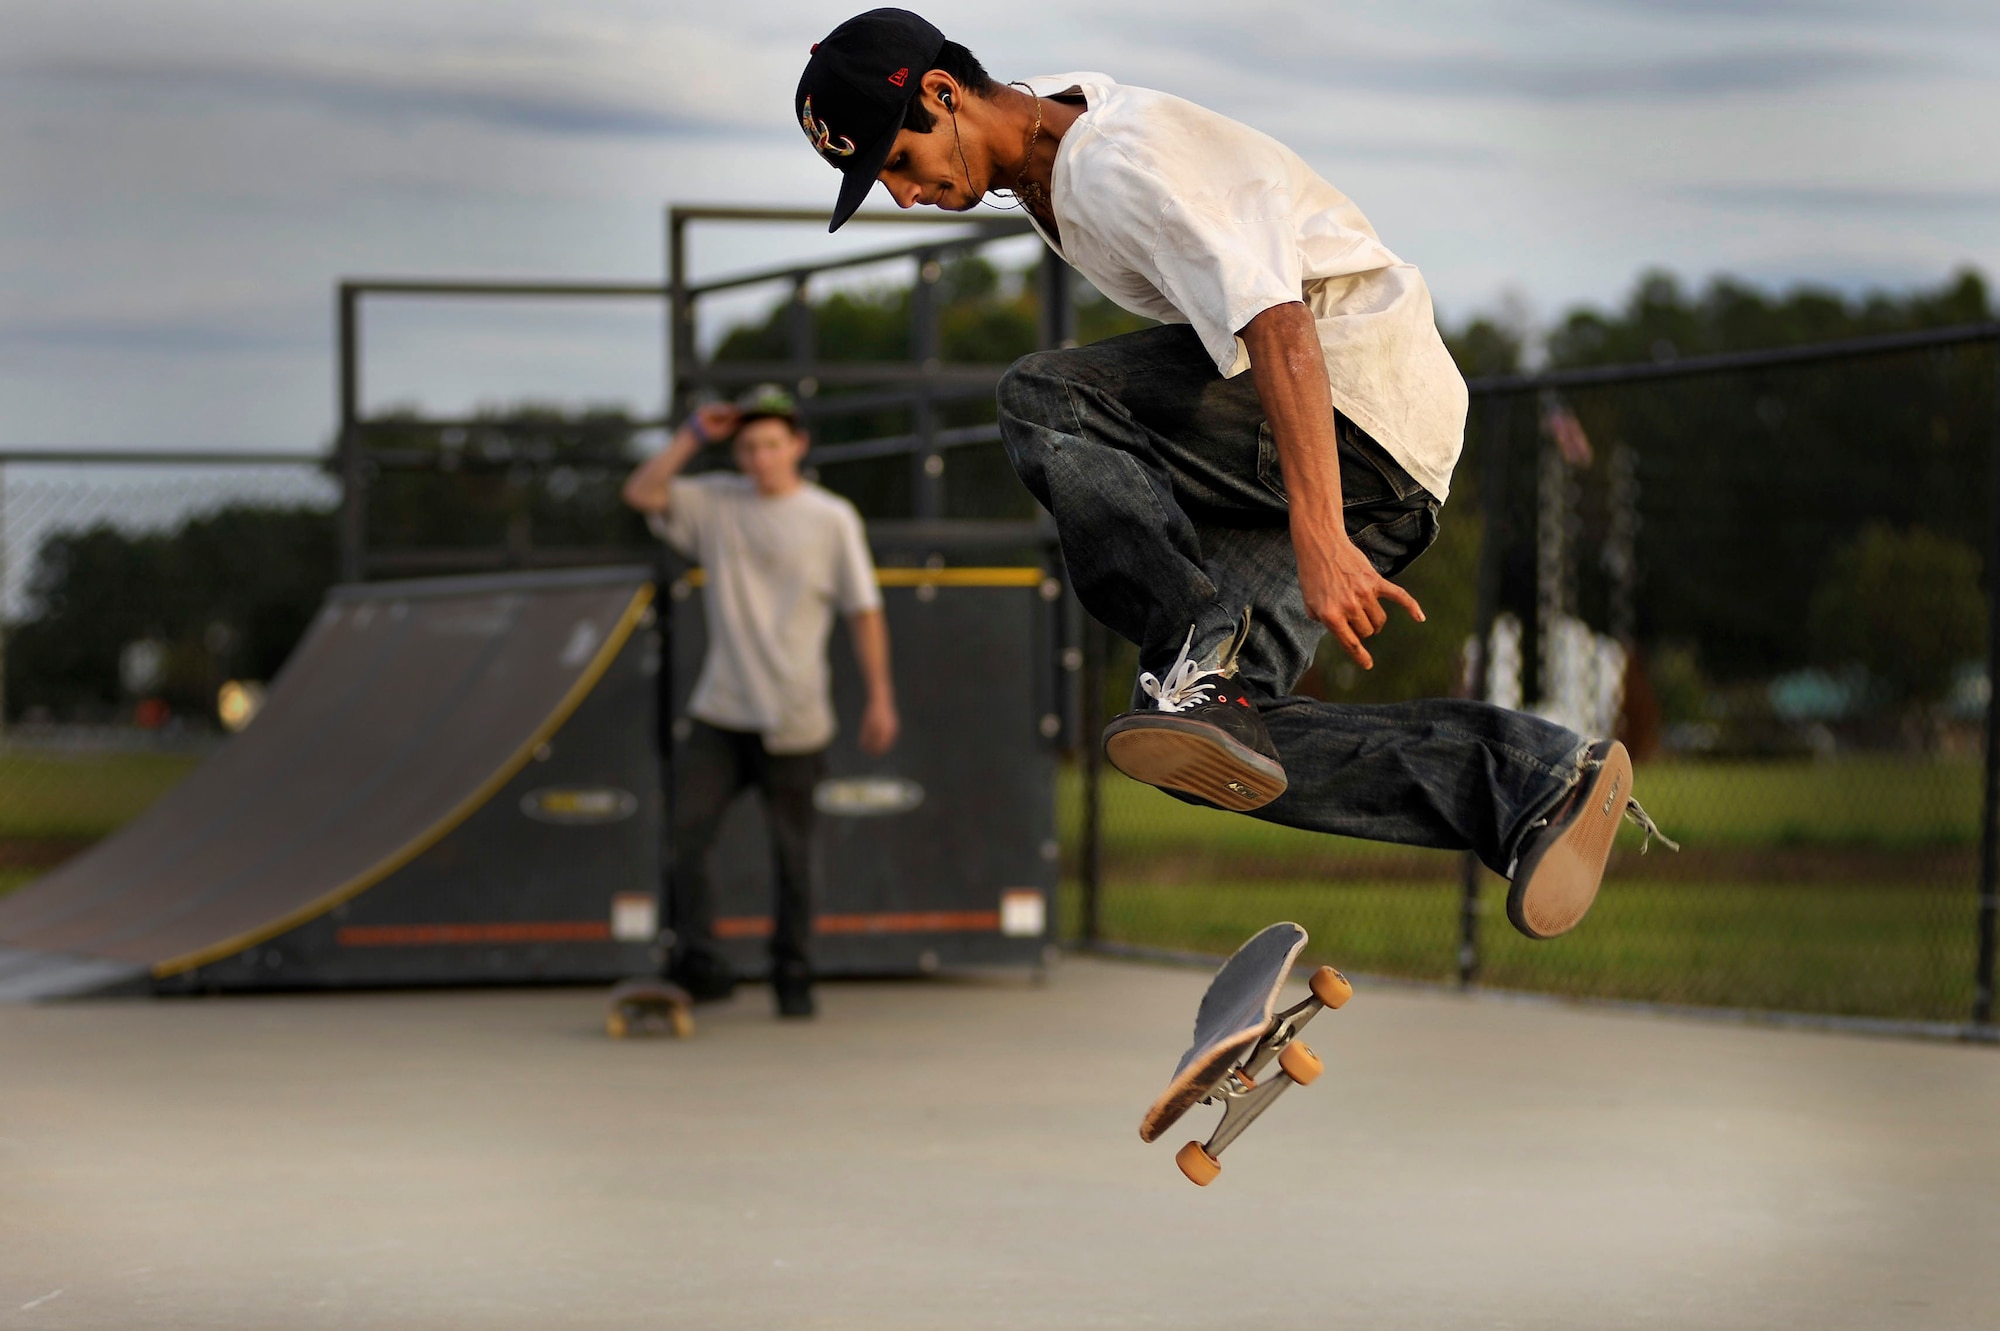 aantal pauze pijnlijk Photo Essay: Local Sumter youth showcase skills at Sumter-Shaw Skate Park >  Shaw Air Force Base > Article Display